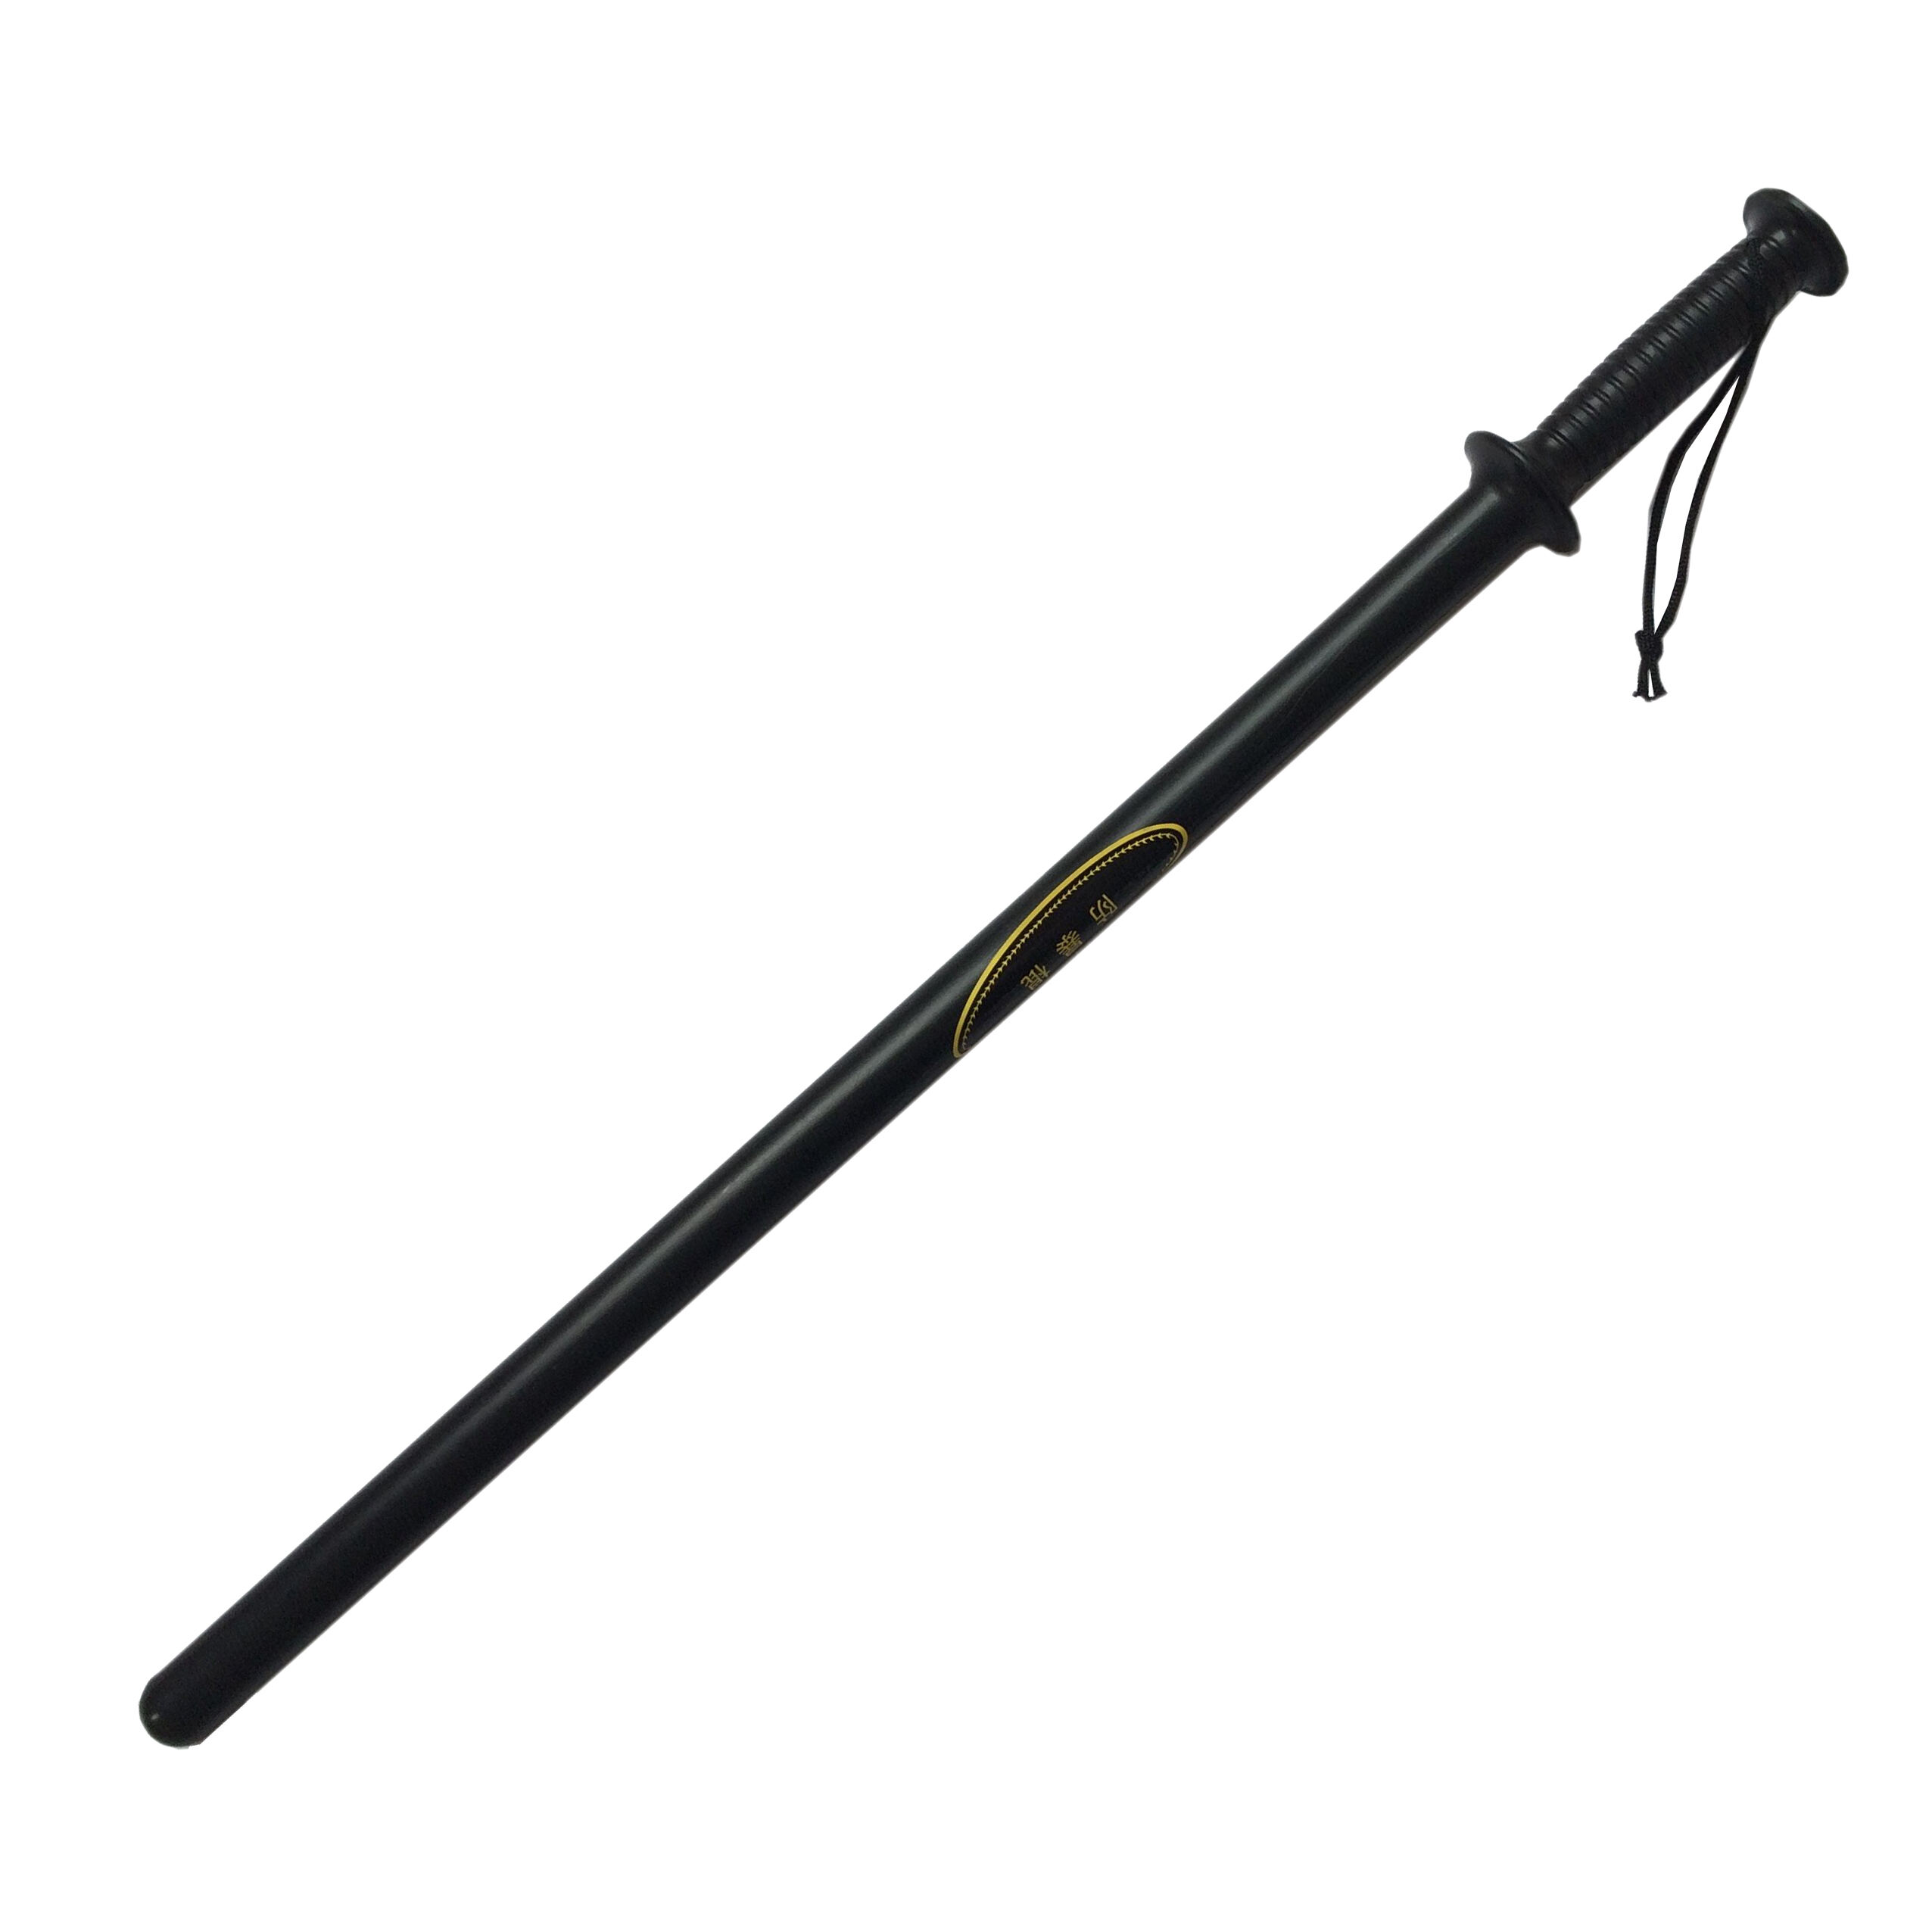 Plastic baton 85cm/100cm long straight police baton factory